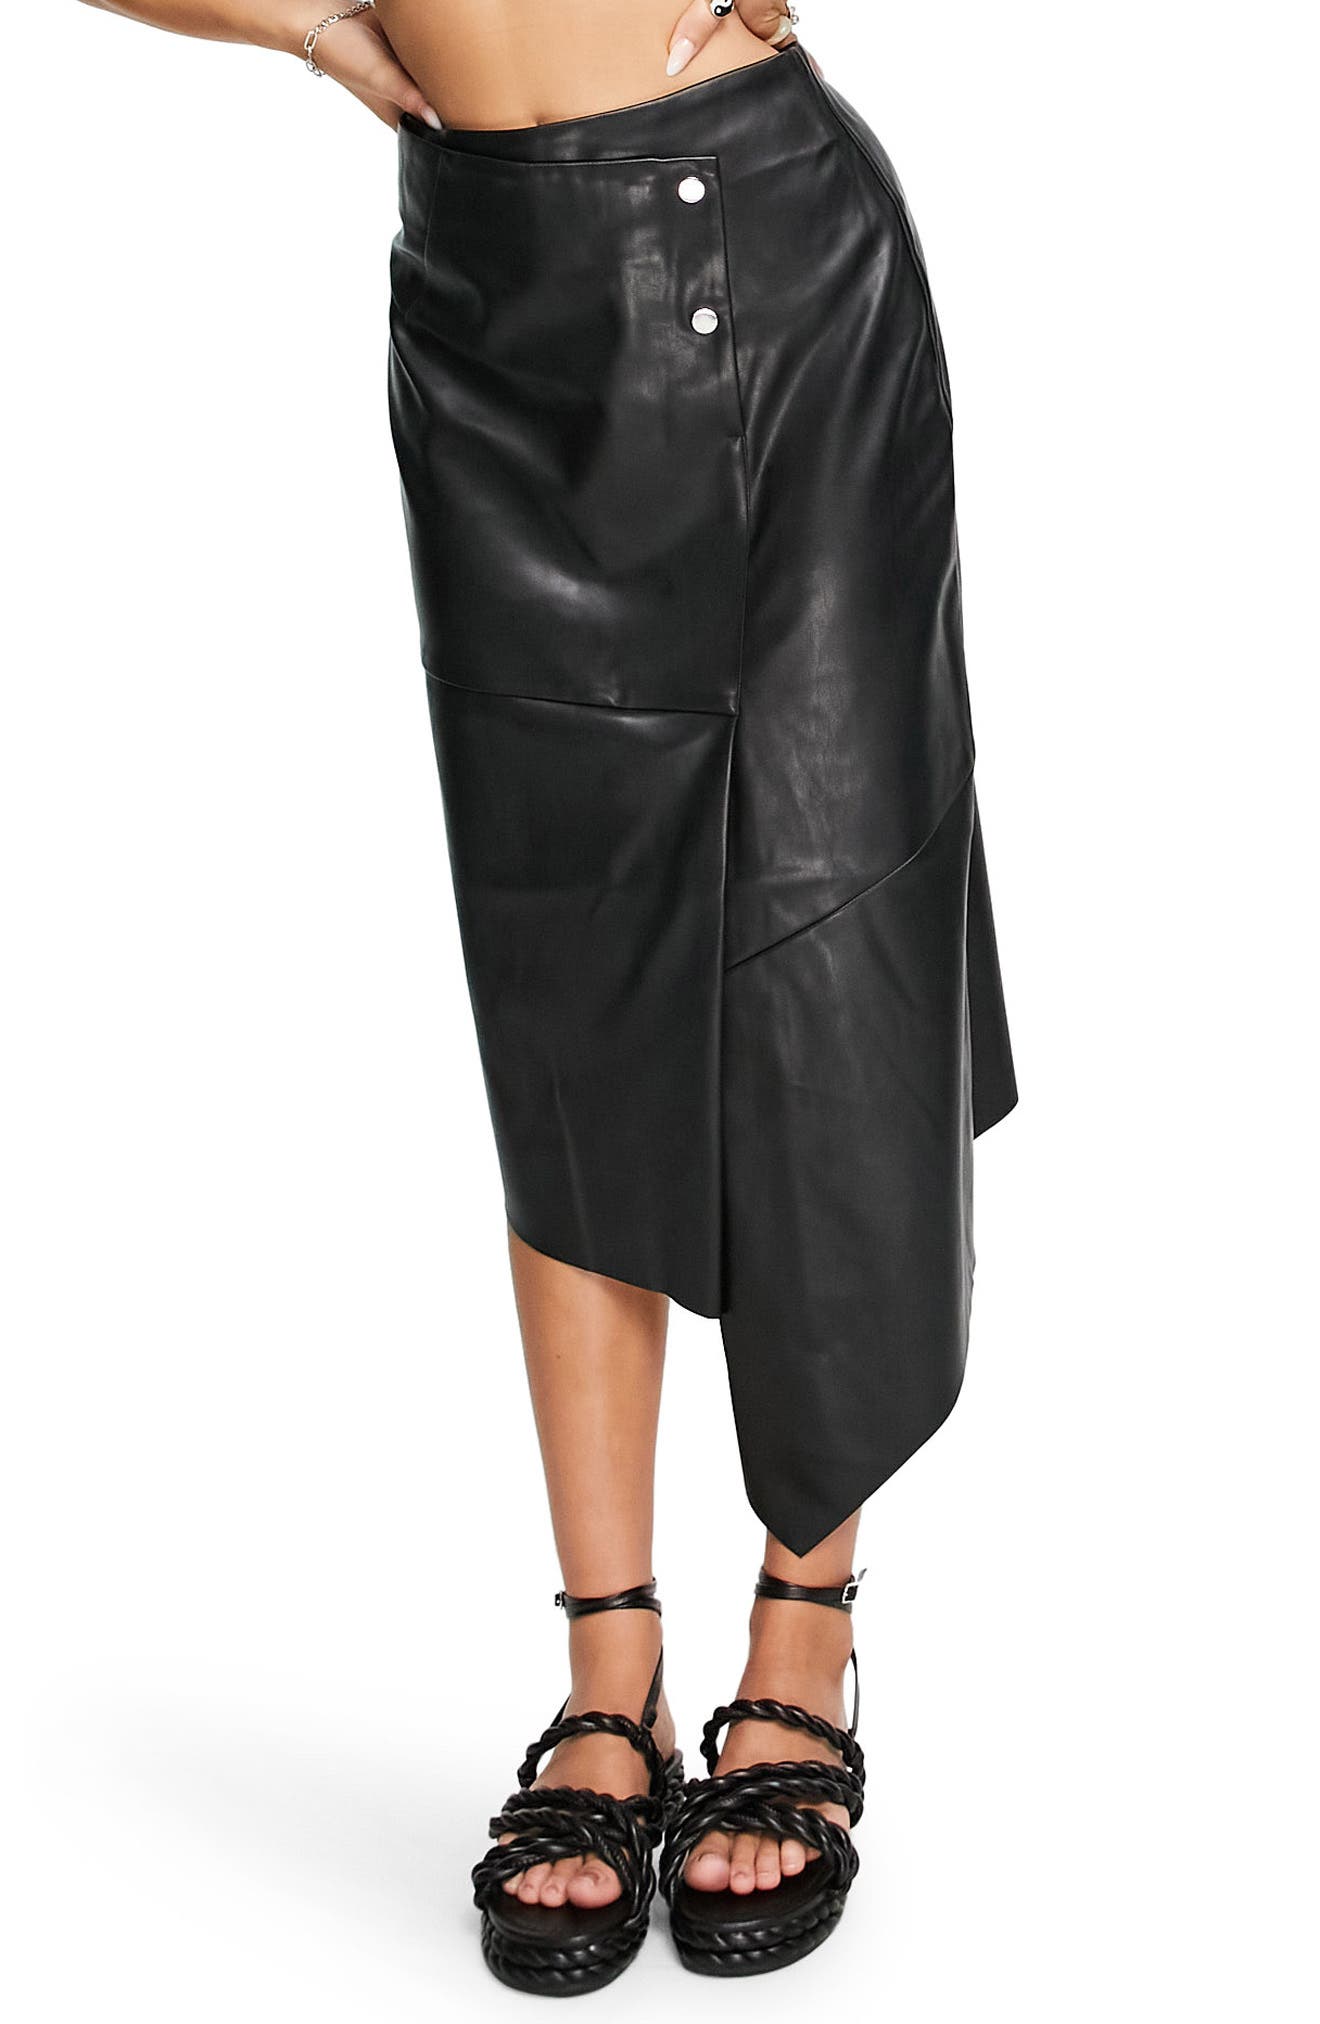 topshop black skirt